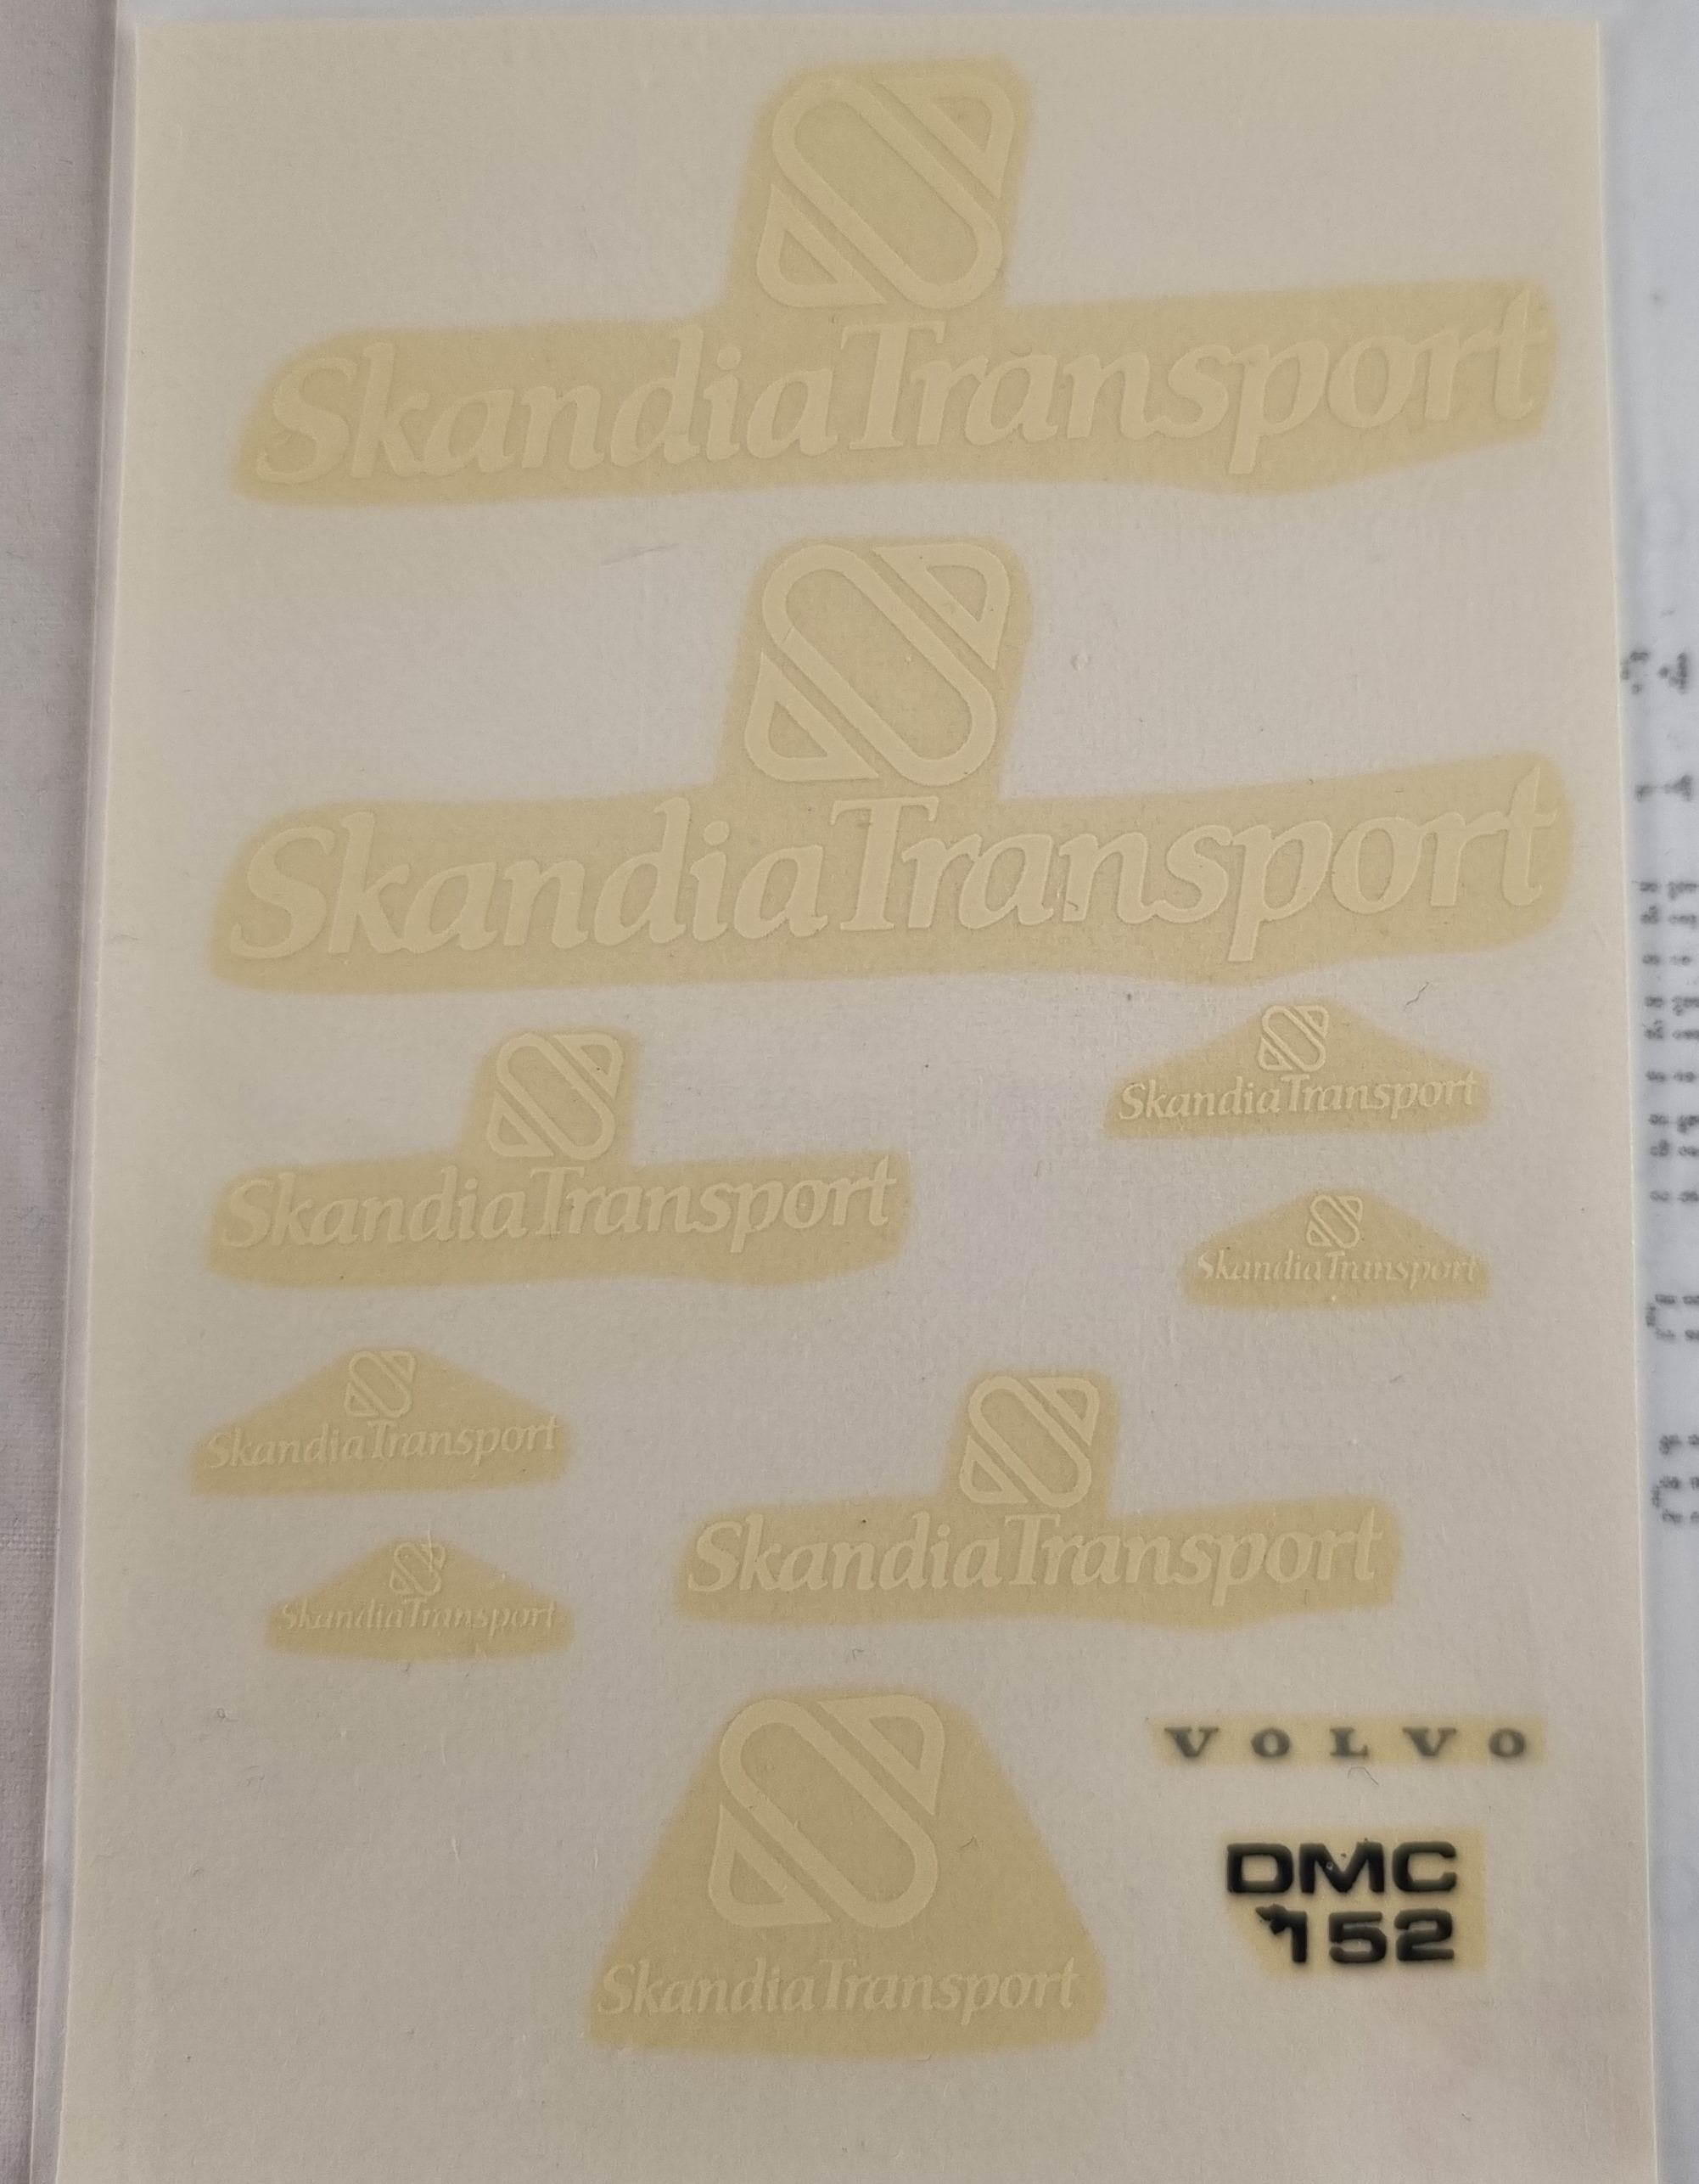 DMC SH 0644-01, Dekaler Scandiatransport, Skala H0, K43